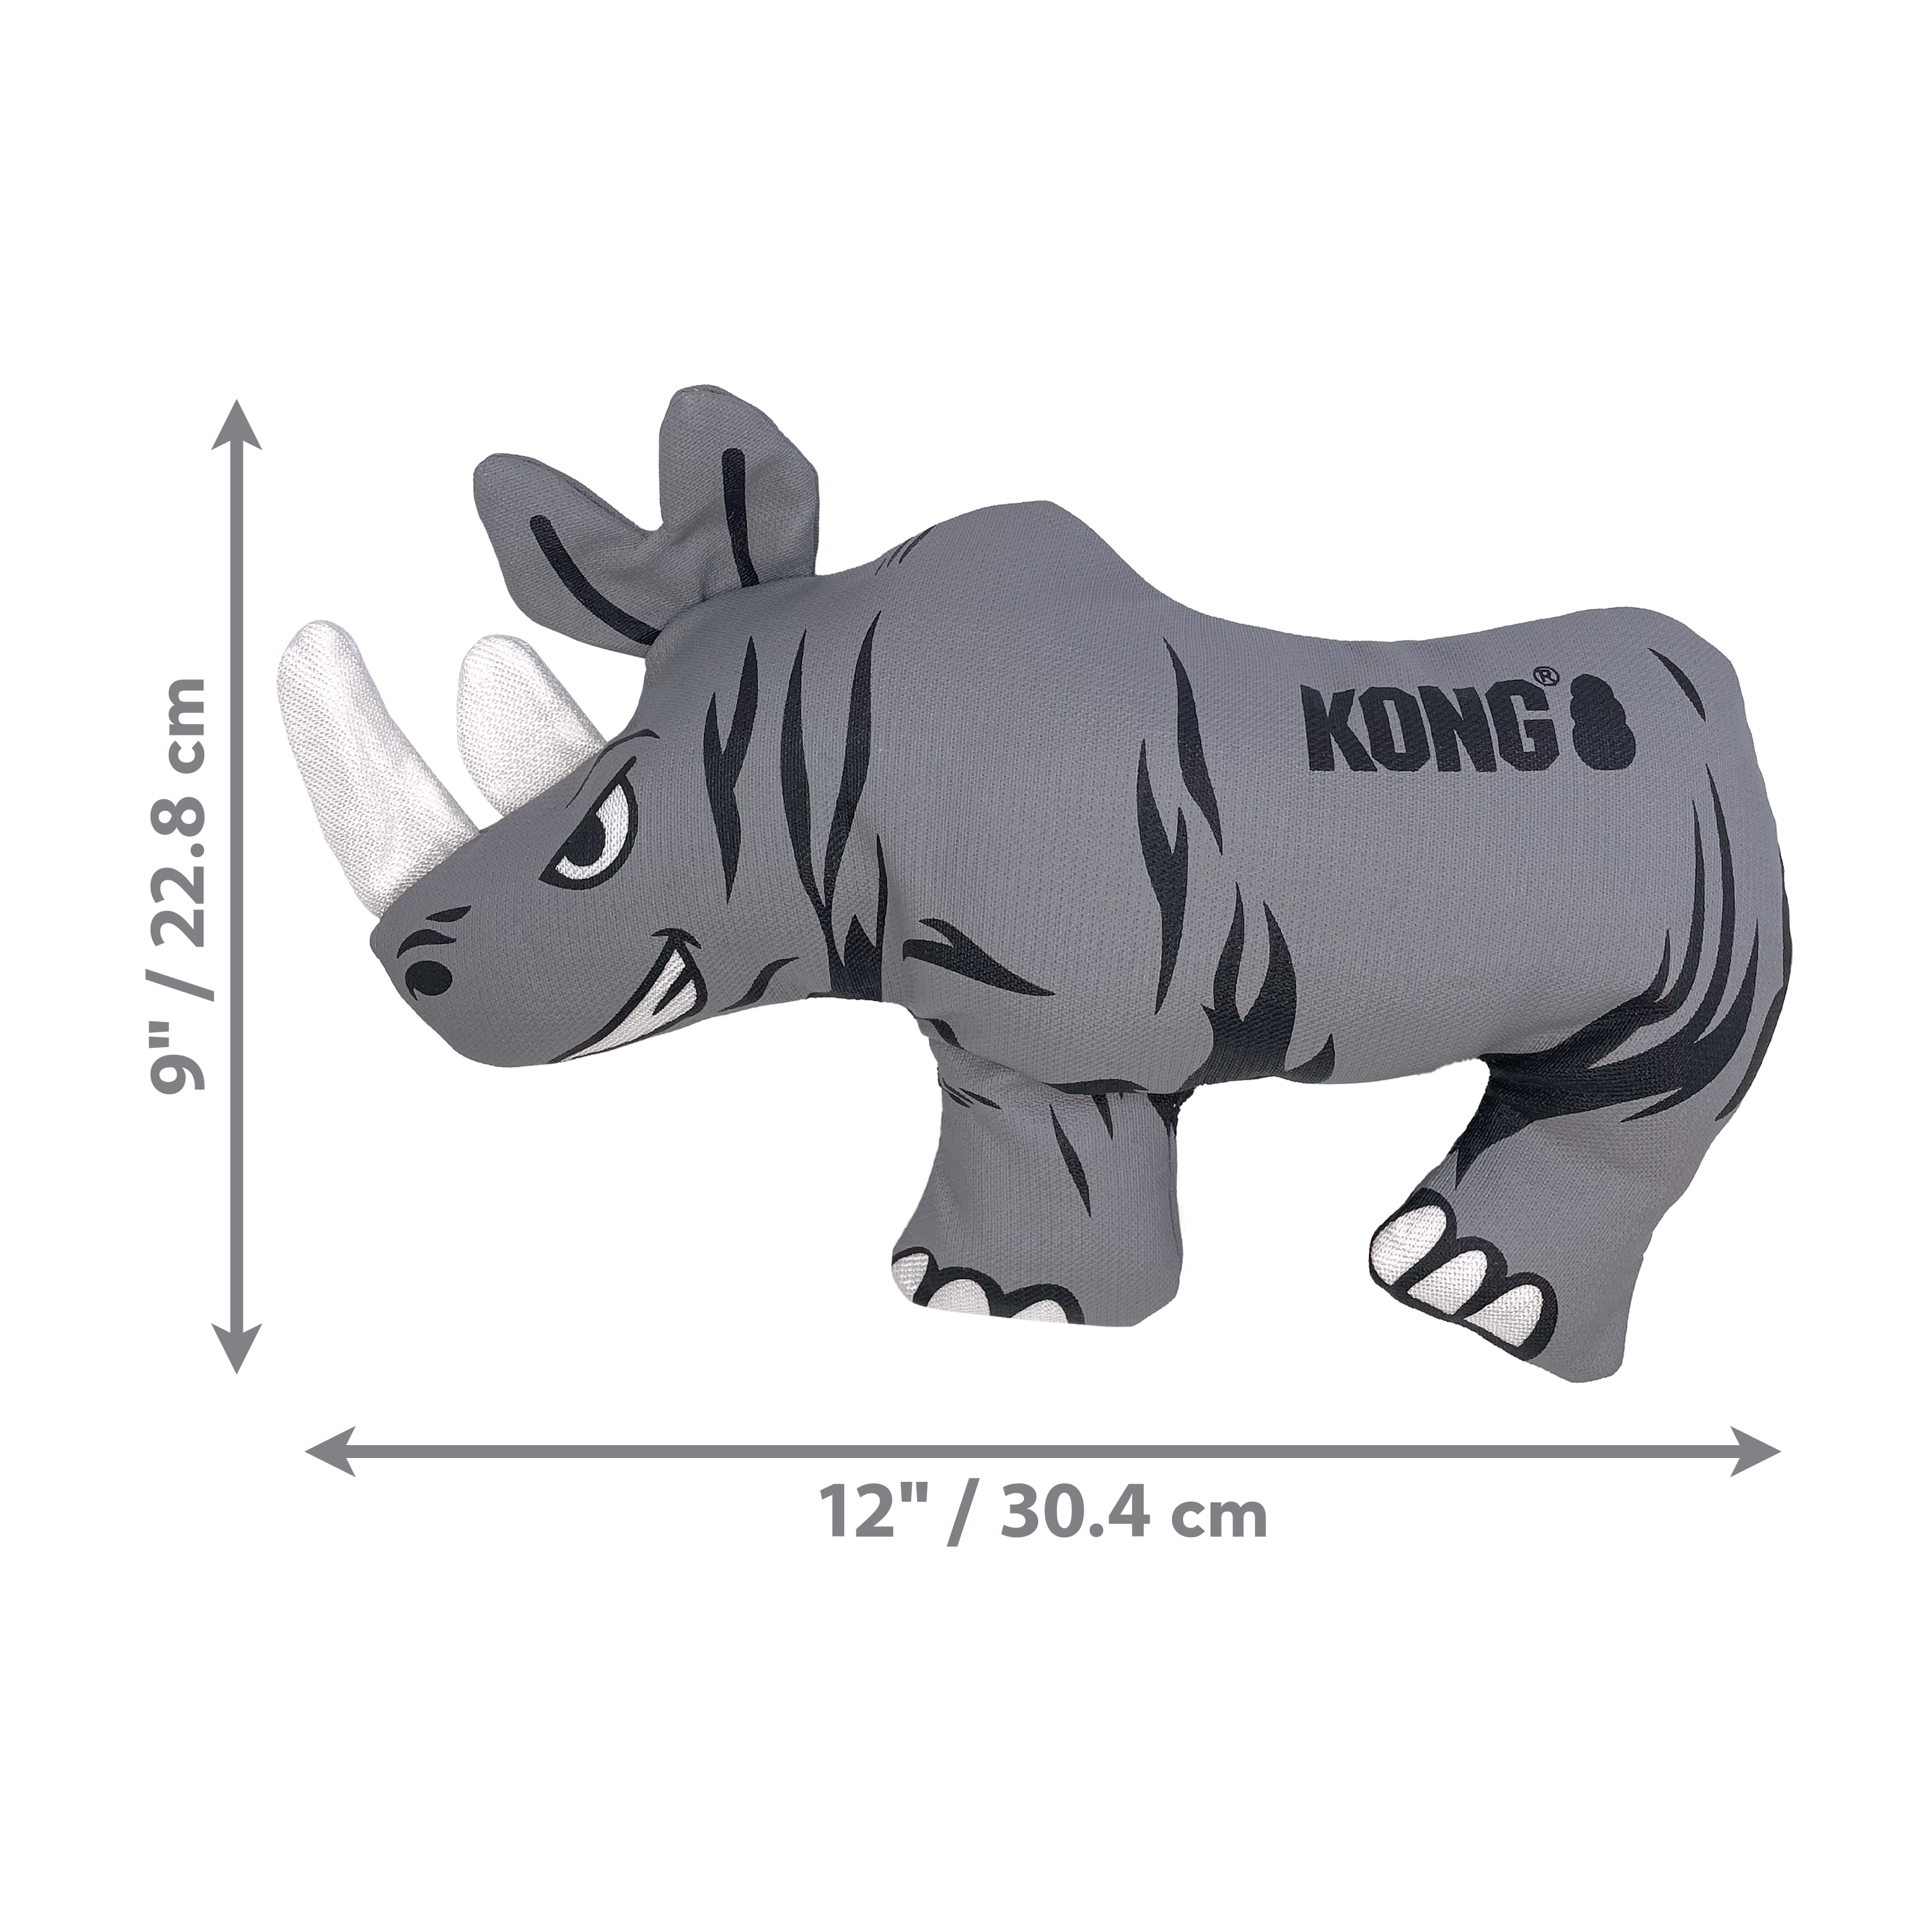 Maxx Rhino dimoffpack product image